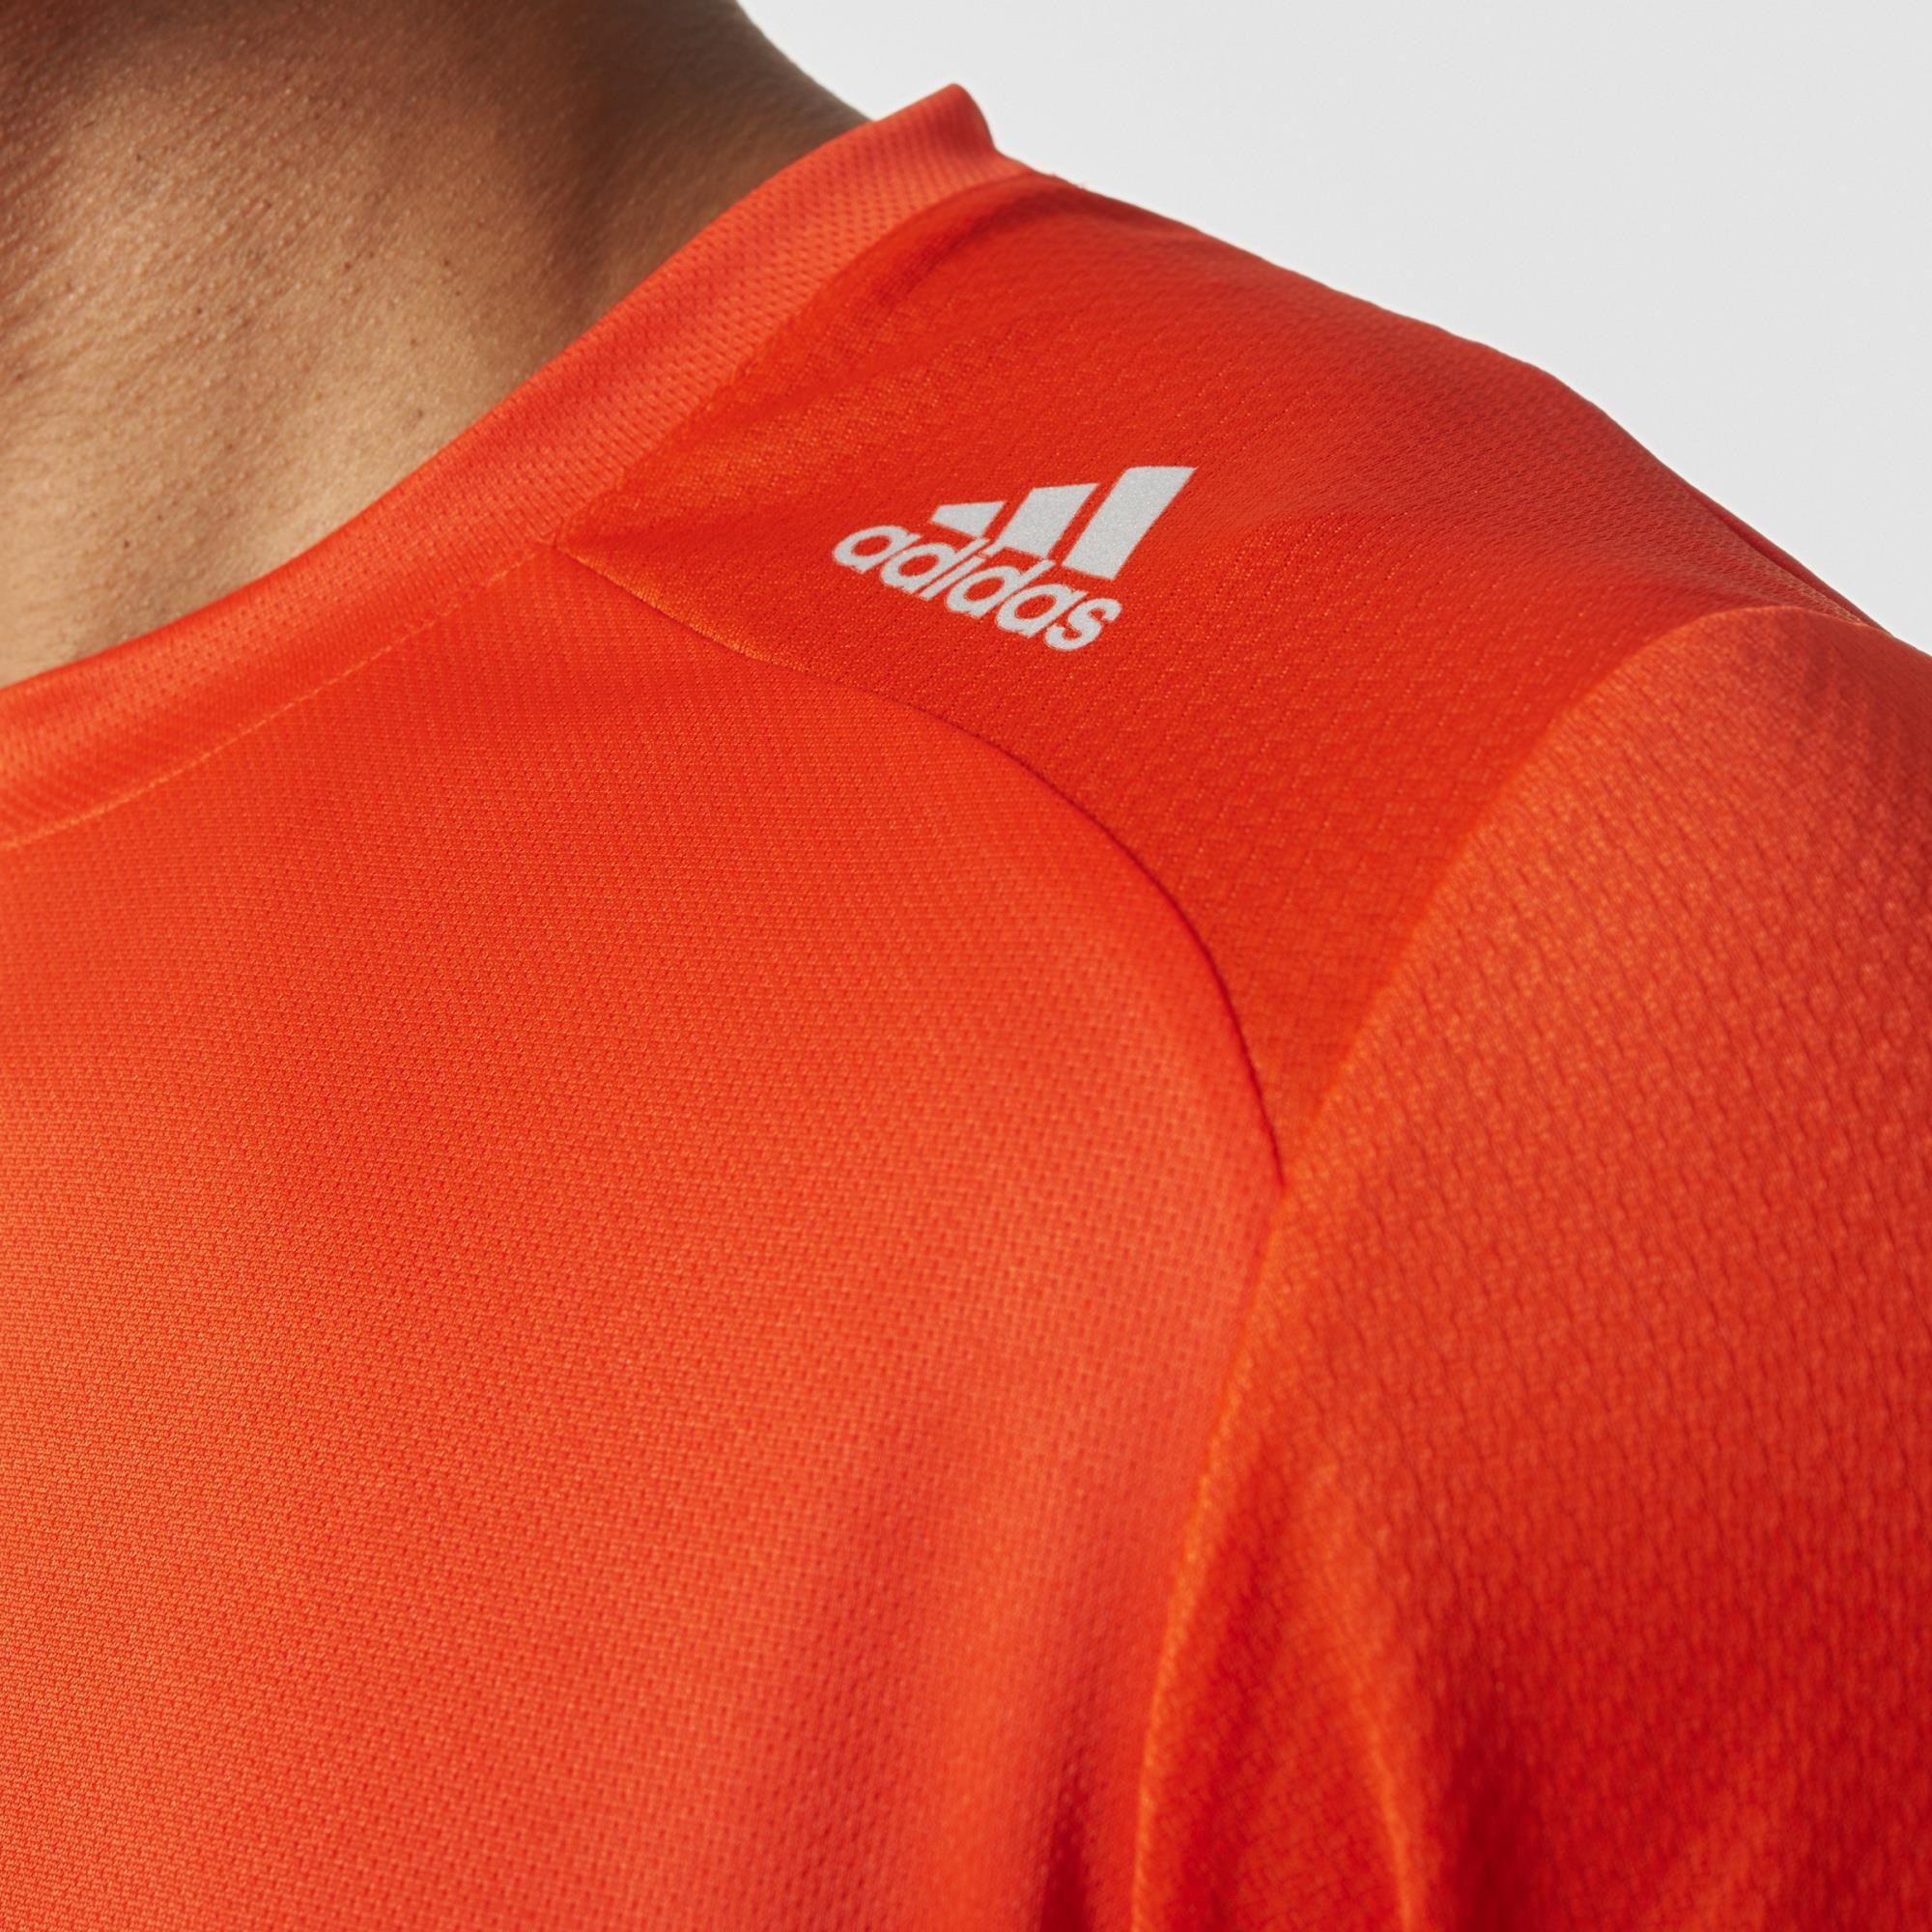 Adidas Mens Response Short Sleeve Tee - Bold Orange - Tennisnuts.com